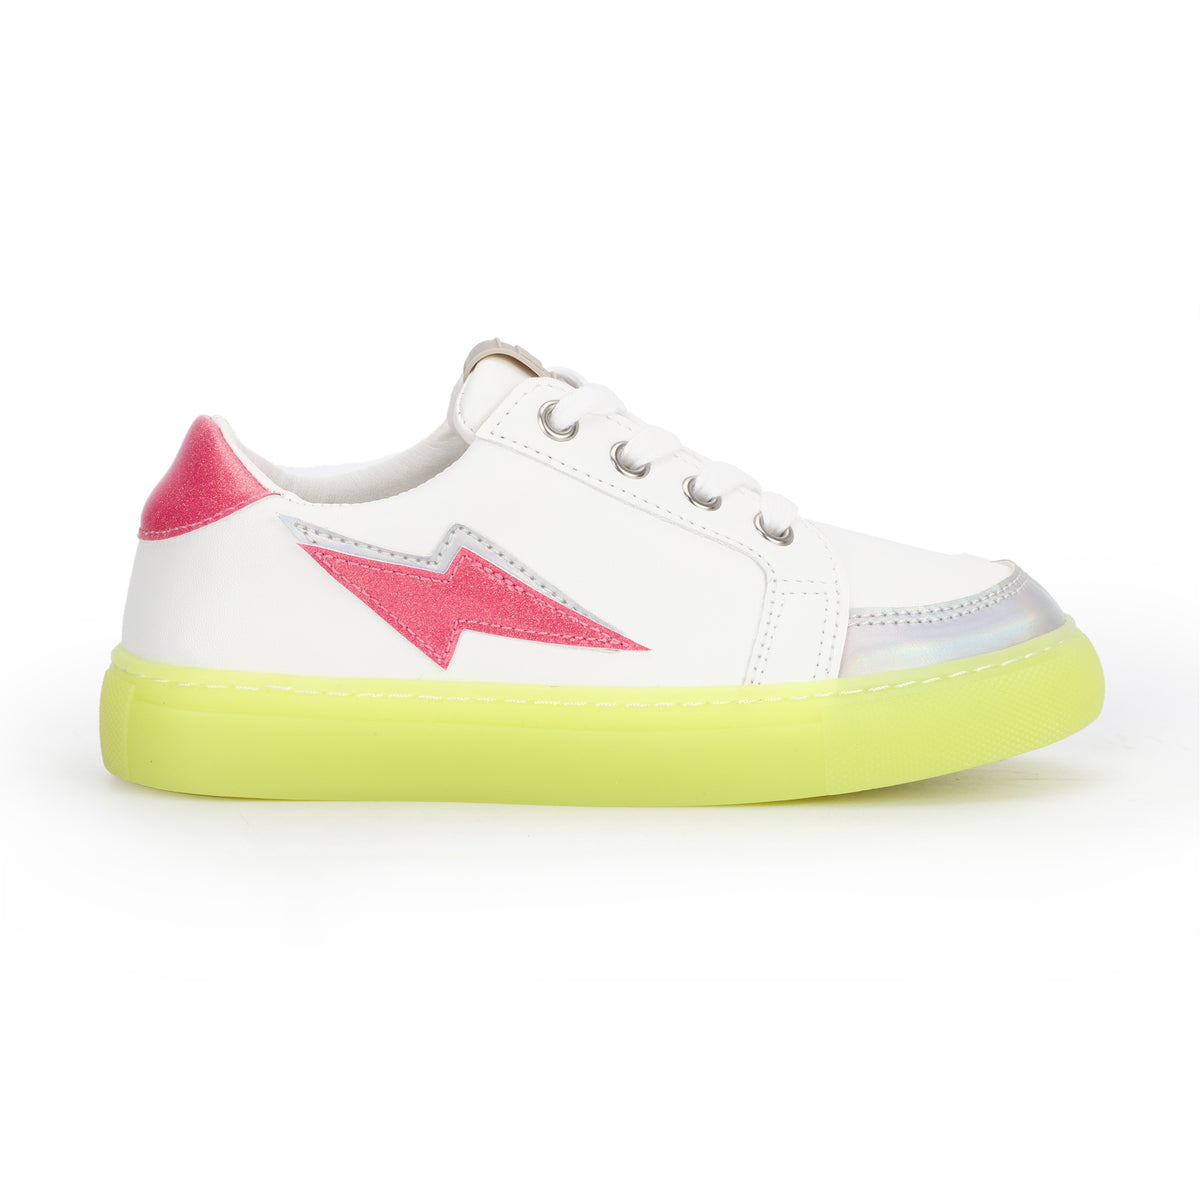 Miss Bolt Sneaker in Pink & Neon Yellow - Kids